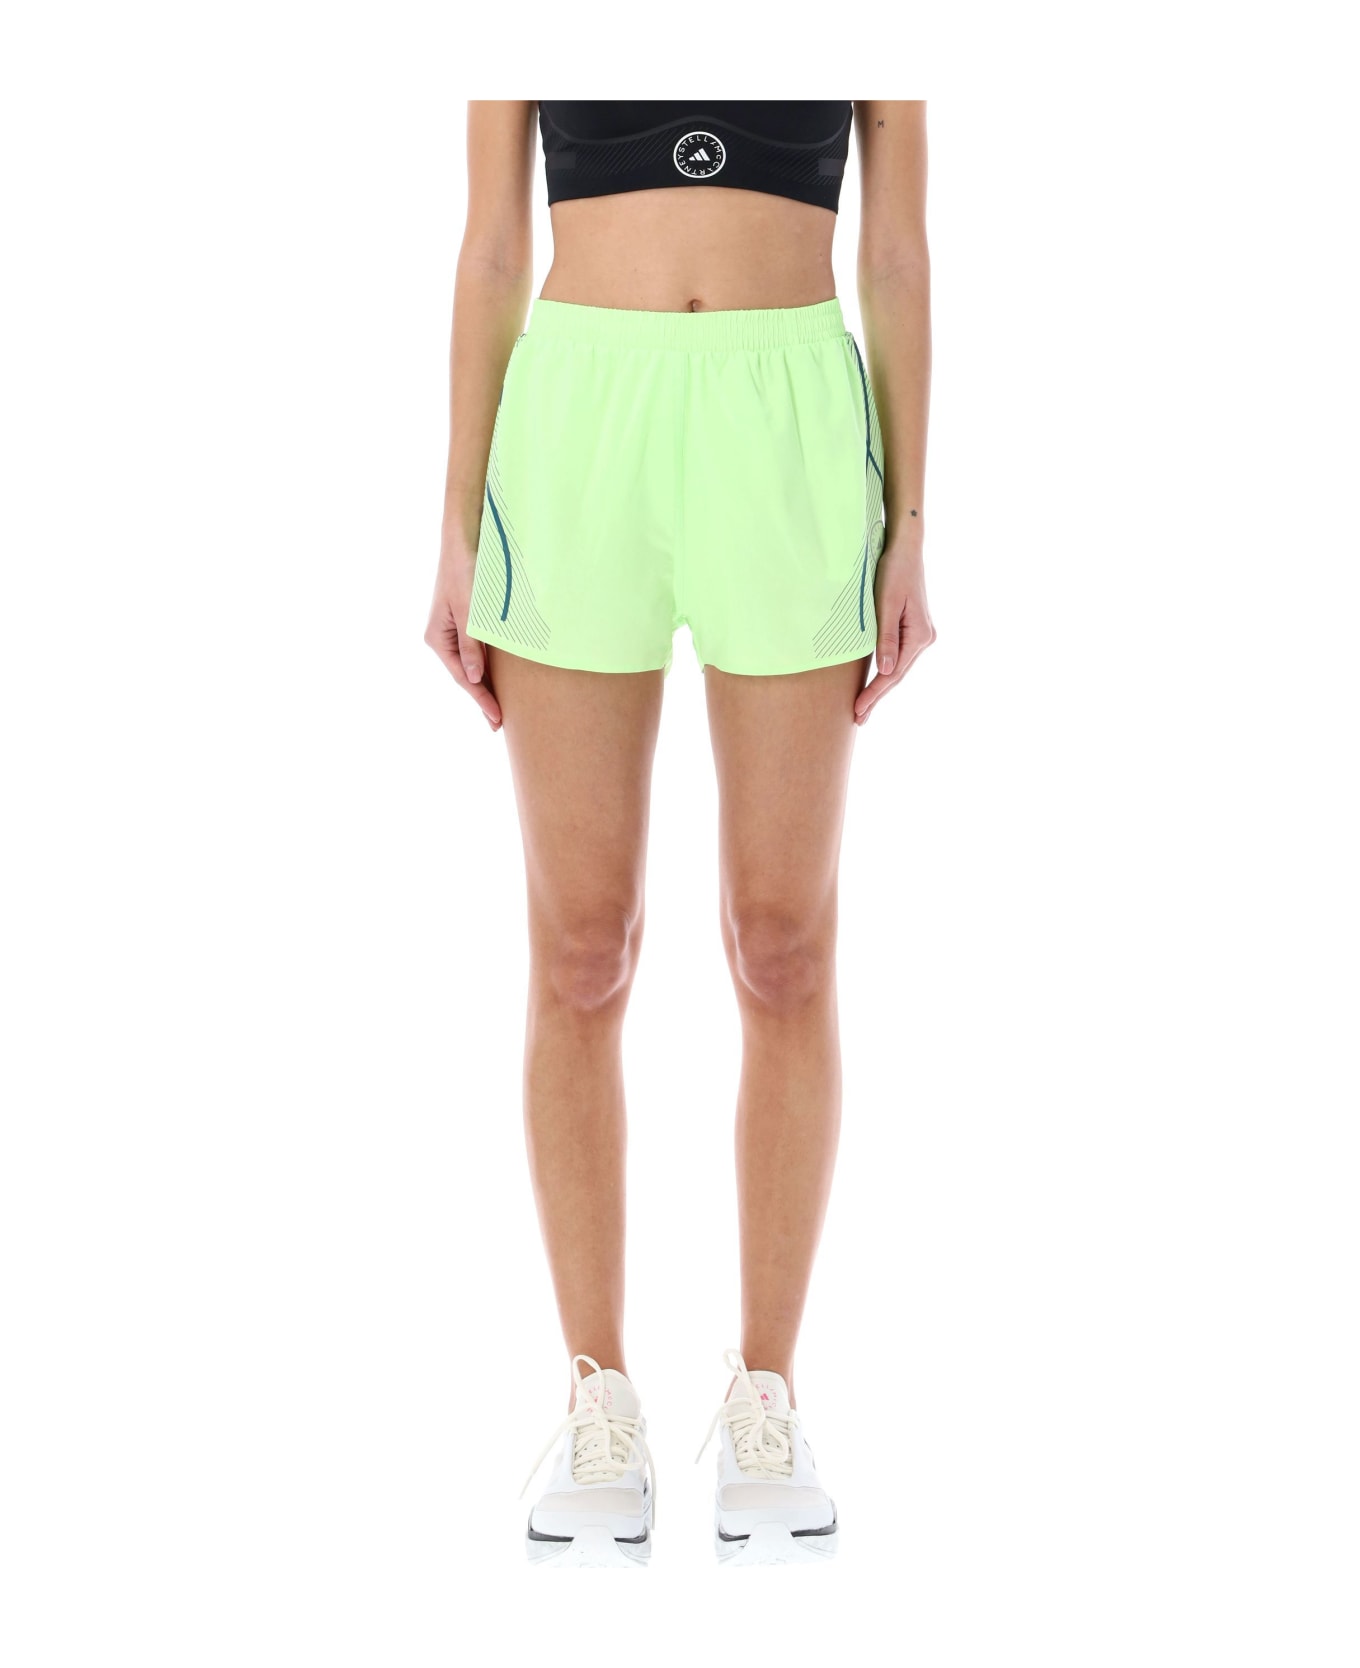 Adidas by Stella McCartney Truepace Running Shorts - GREEN SPARK ショートパンツ